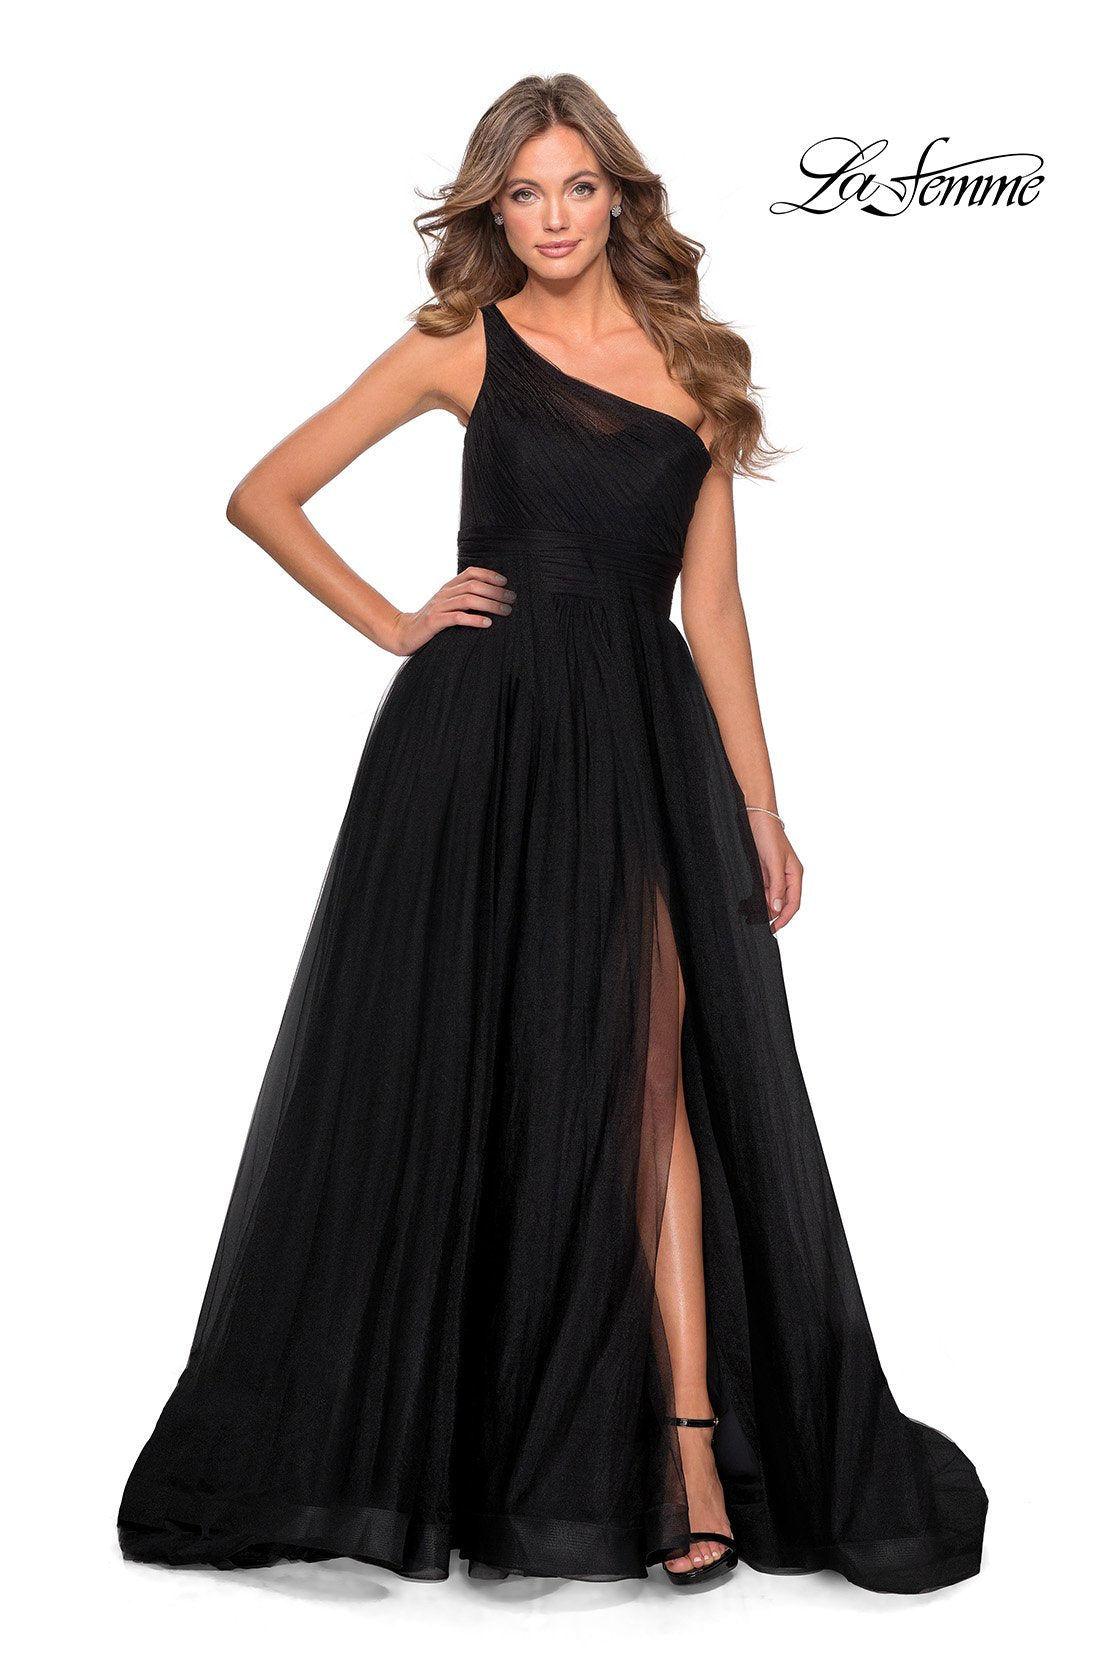 La Femme 28383 dress images in these colors: Black.